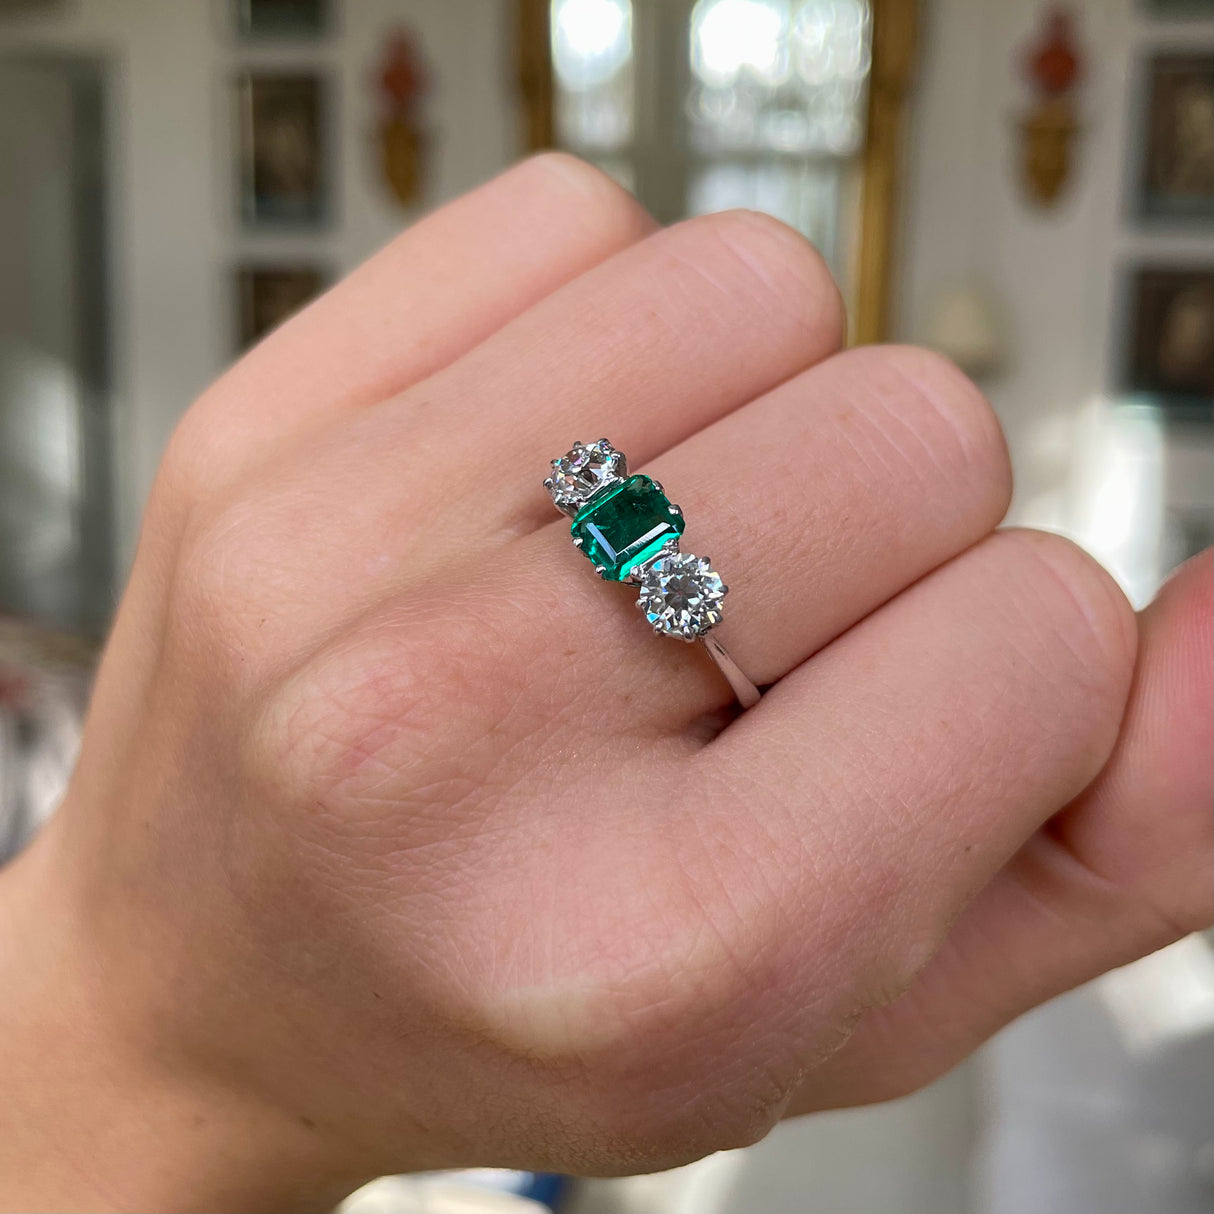 Vintage Art Deco three-stone emerald and diamond engagement ring, worn on hand.